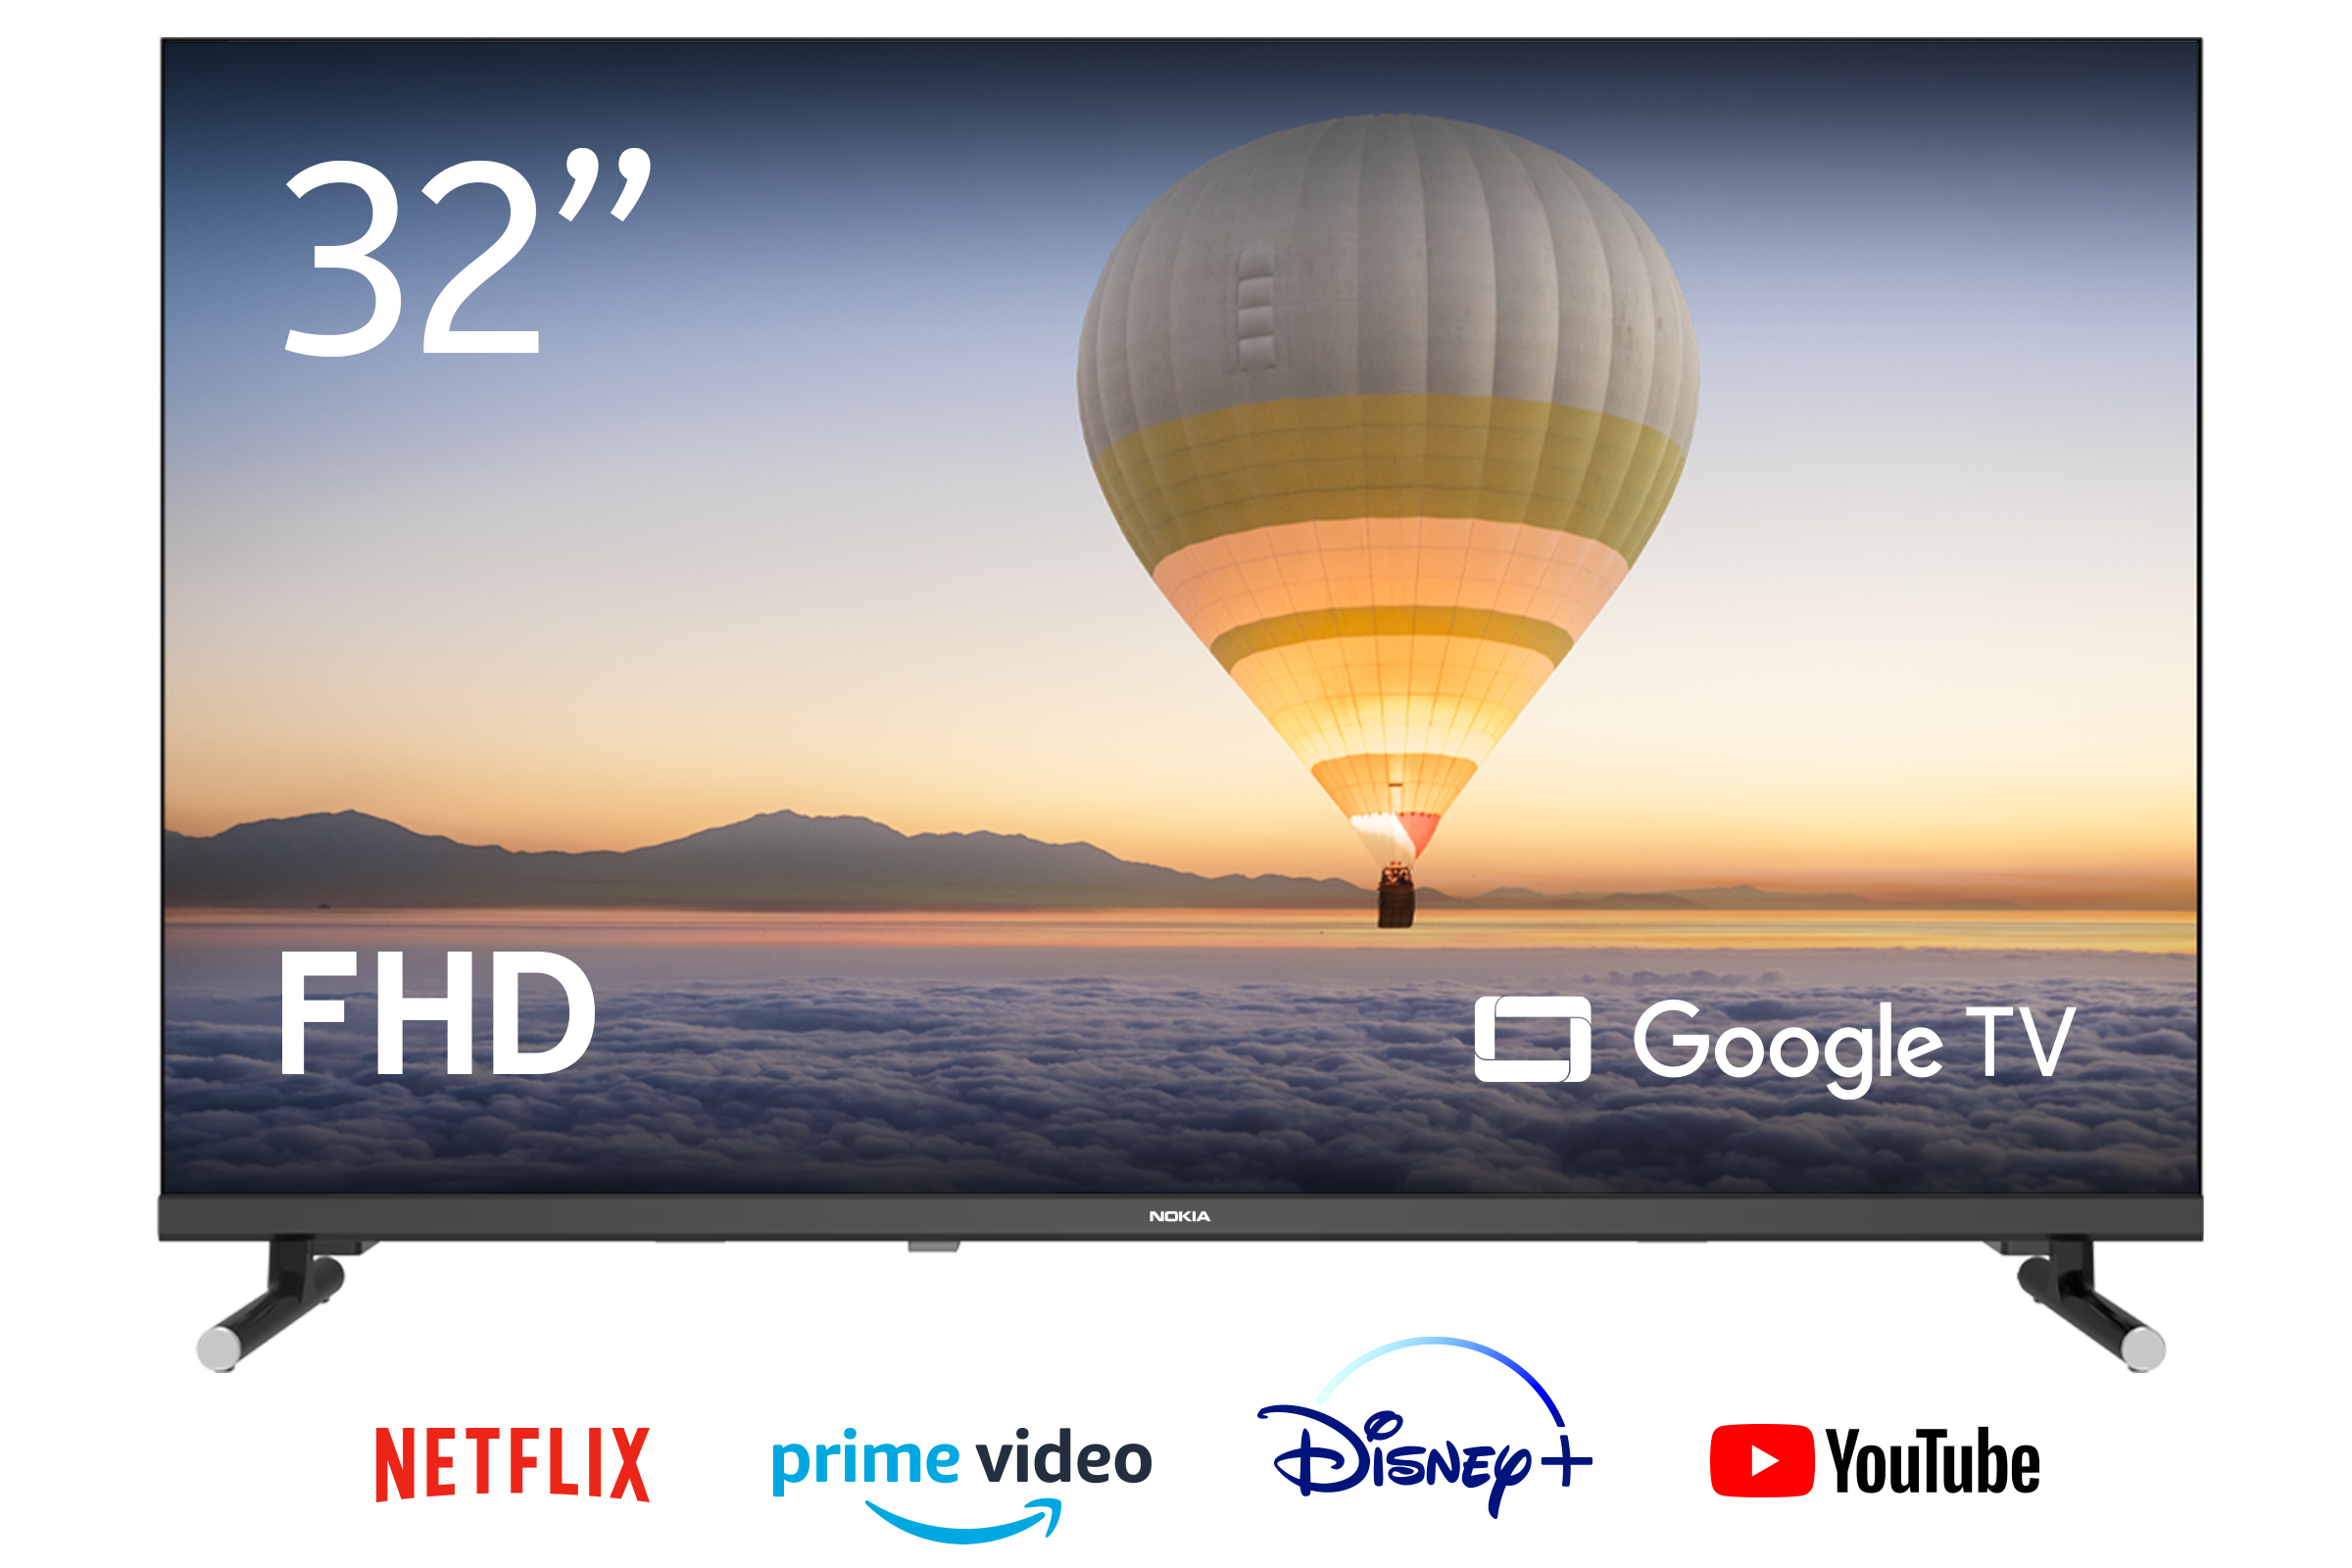 Nokia Google TV 32'' Full HD